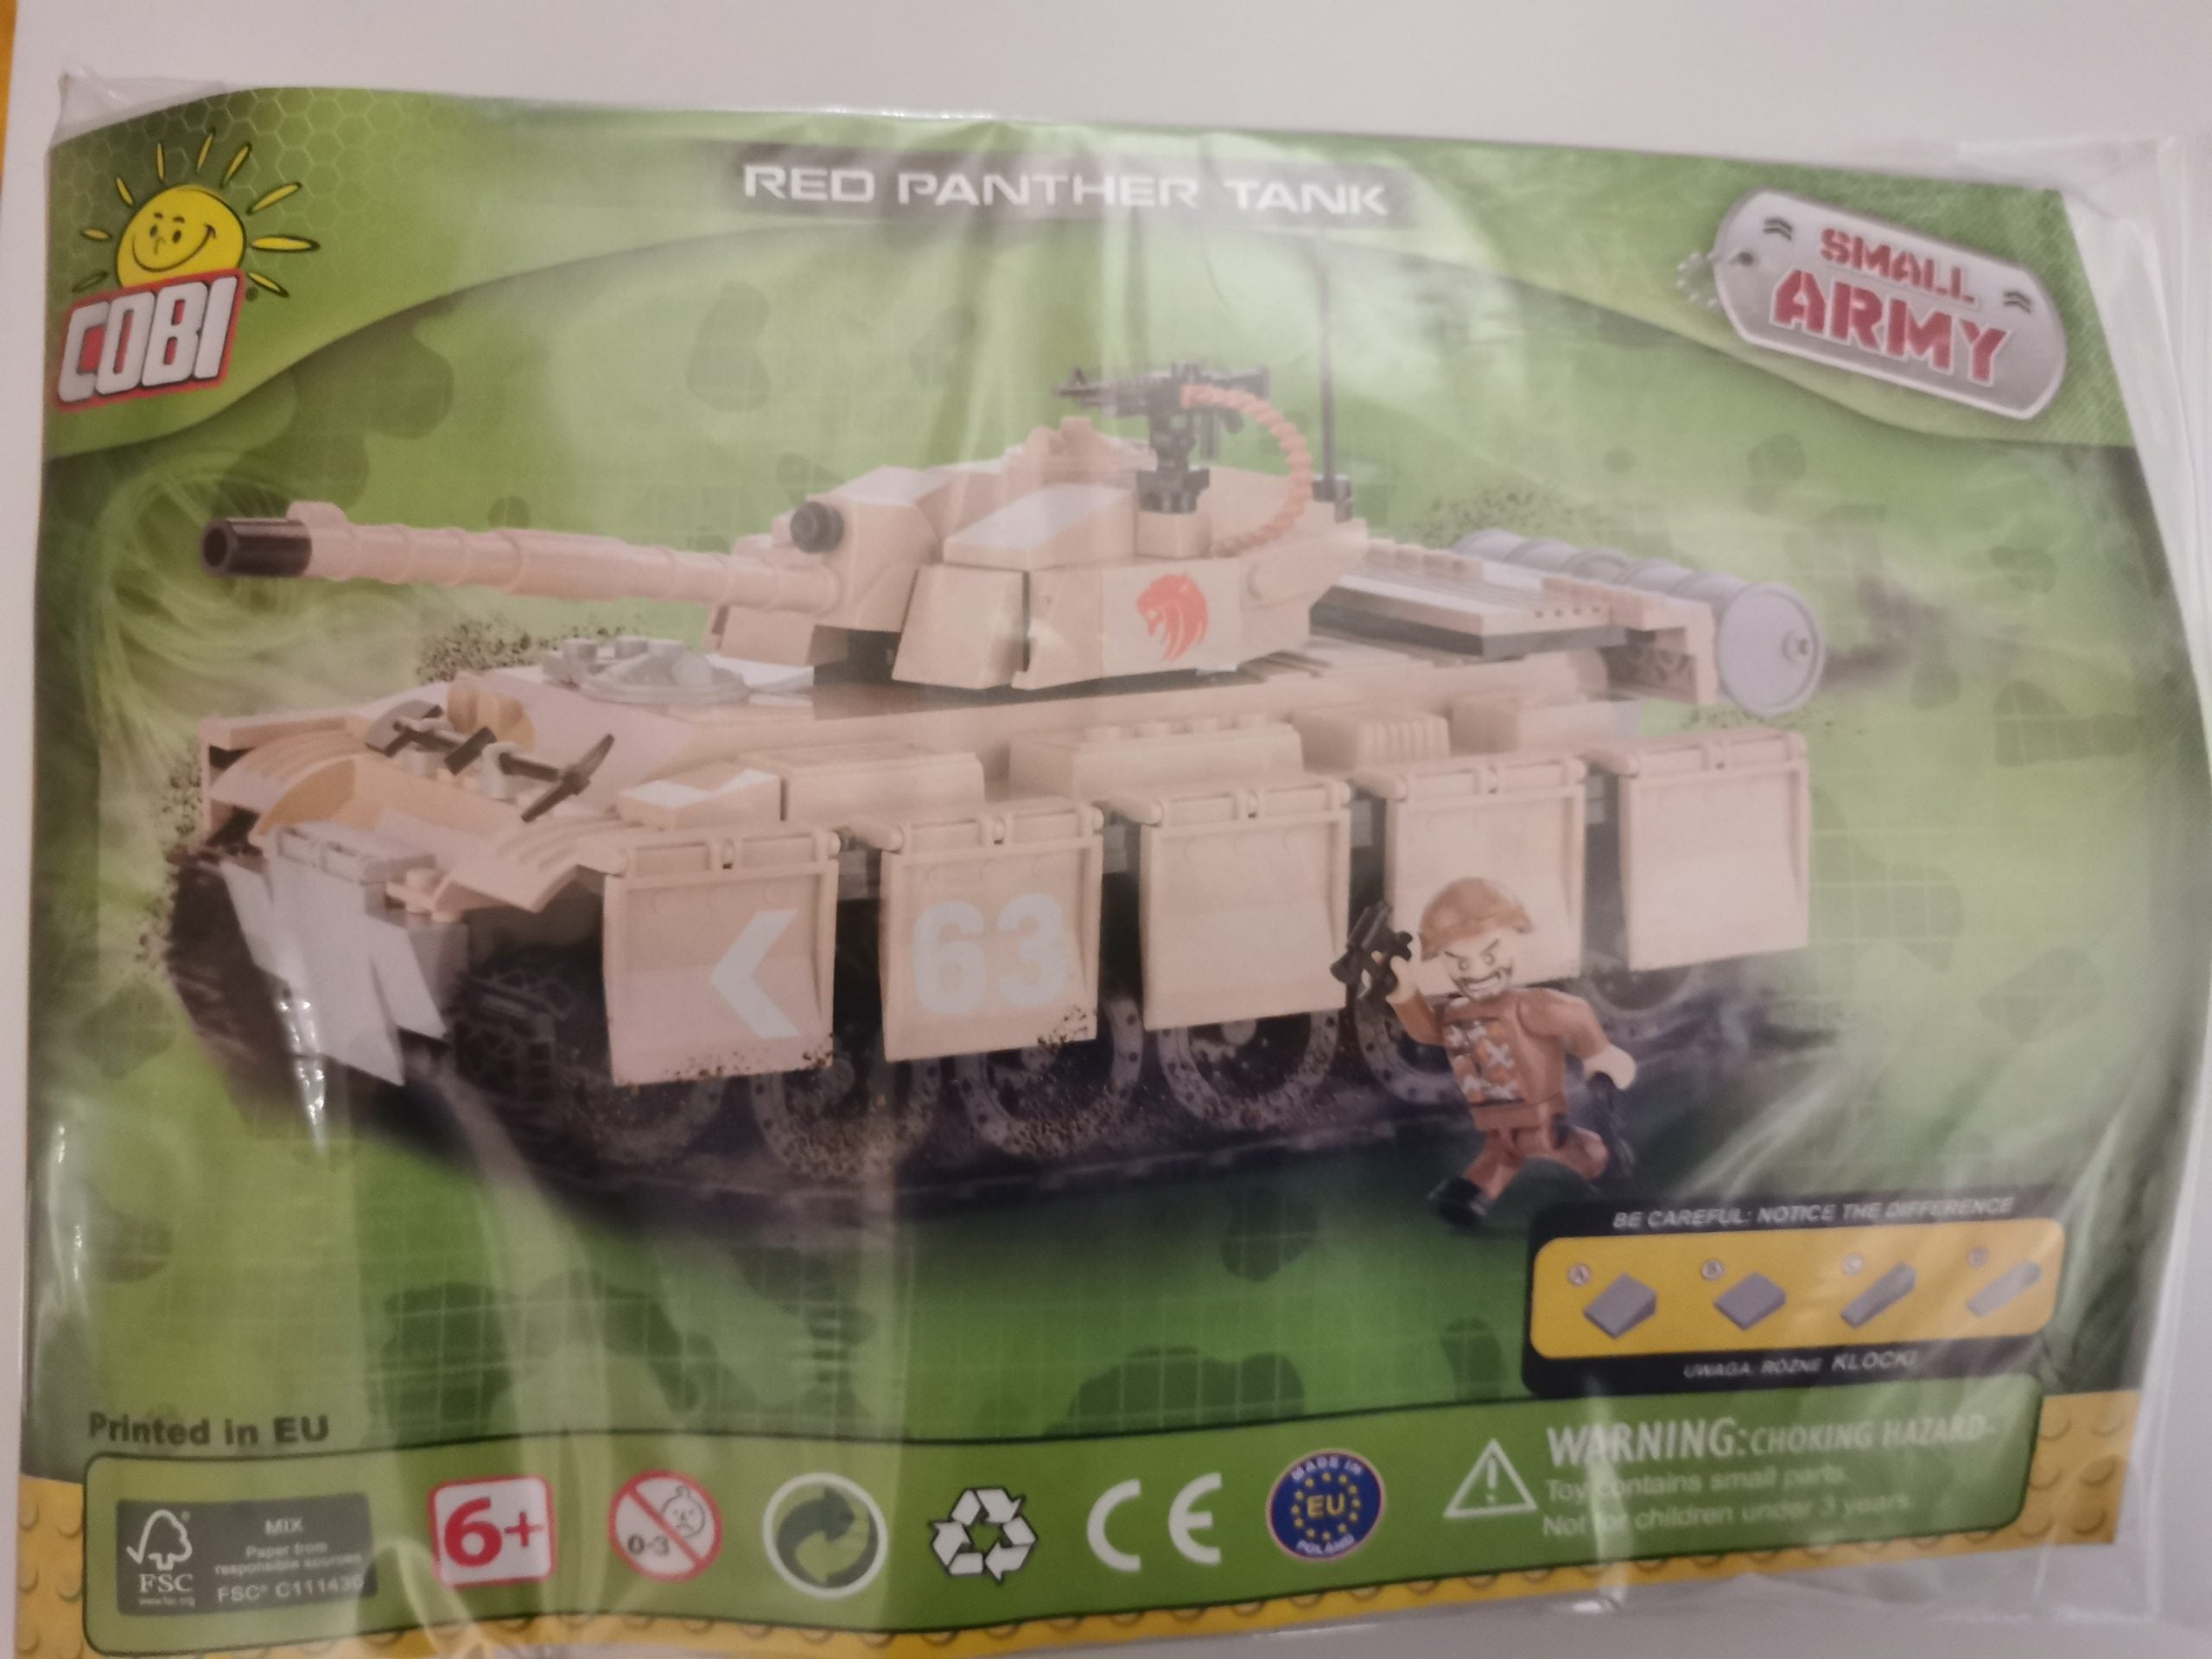 Cobi 2605 Red Panther Tank gebraucht